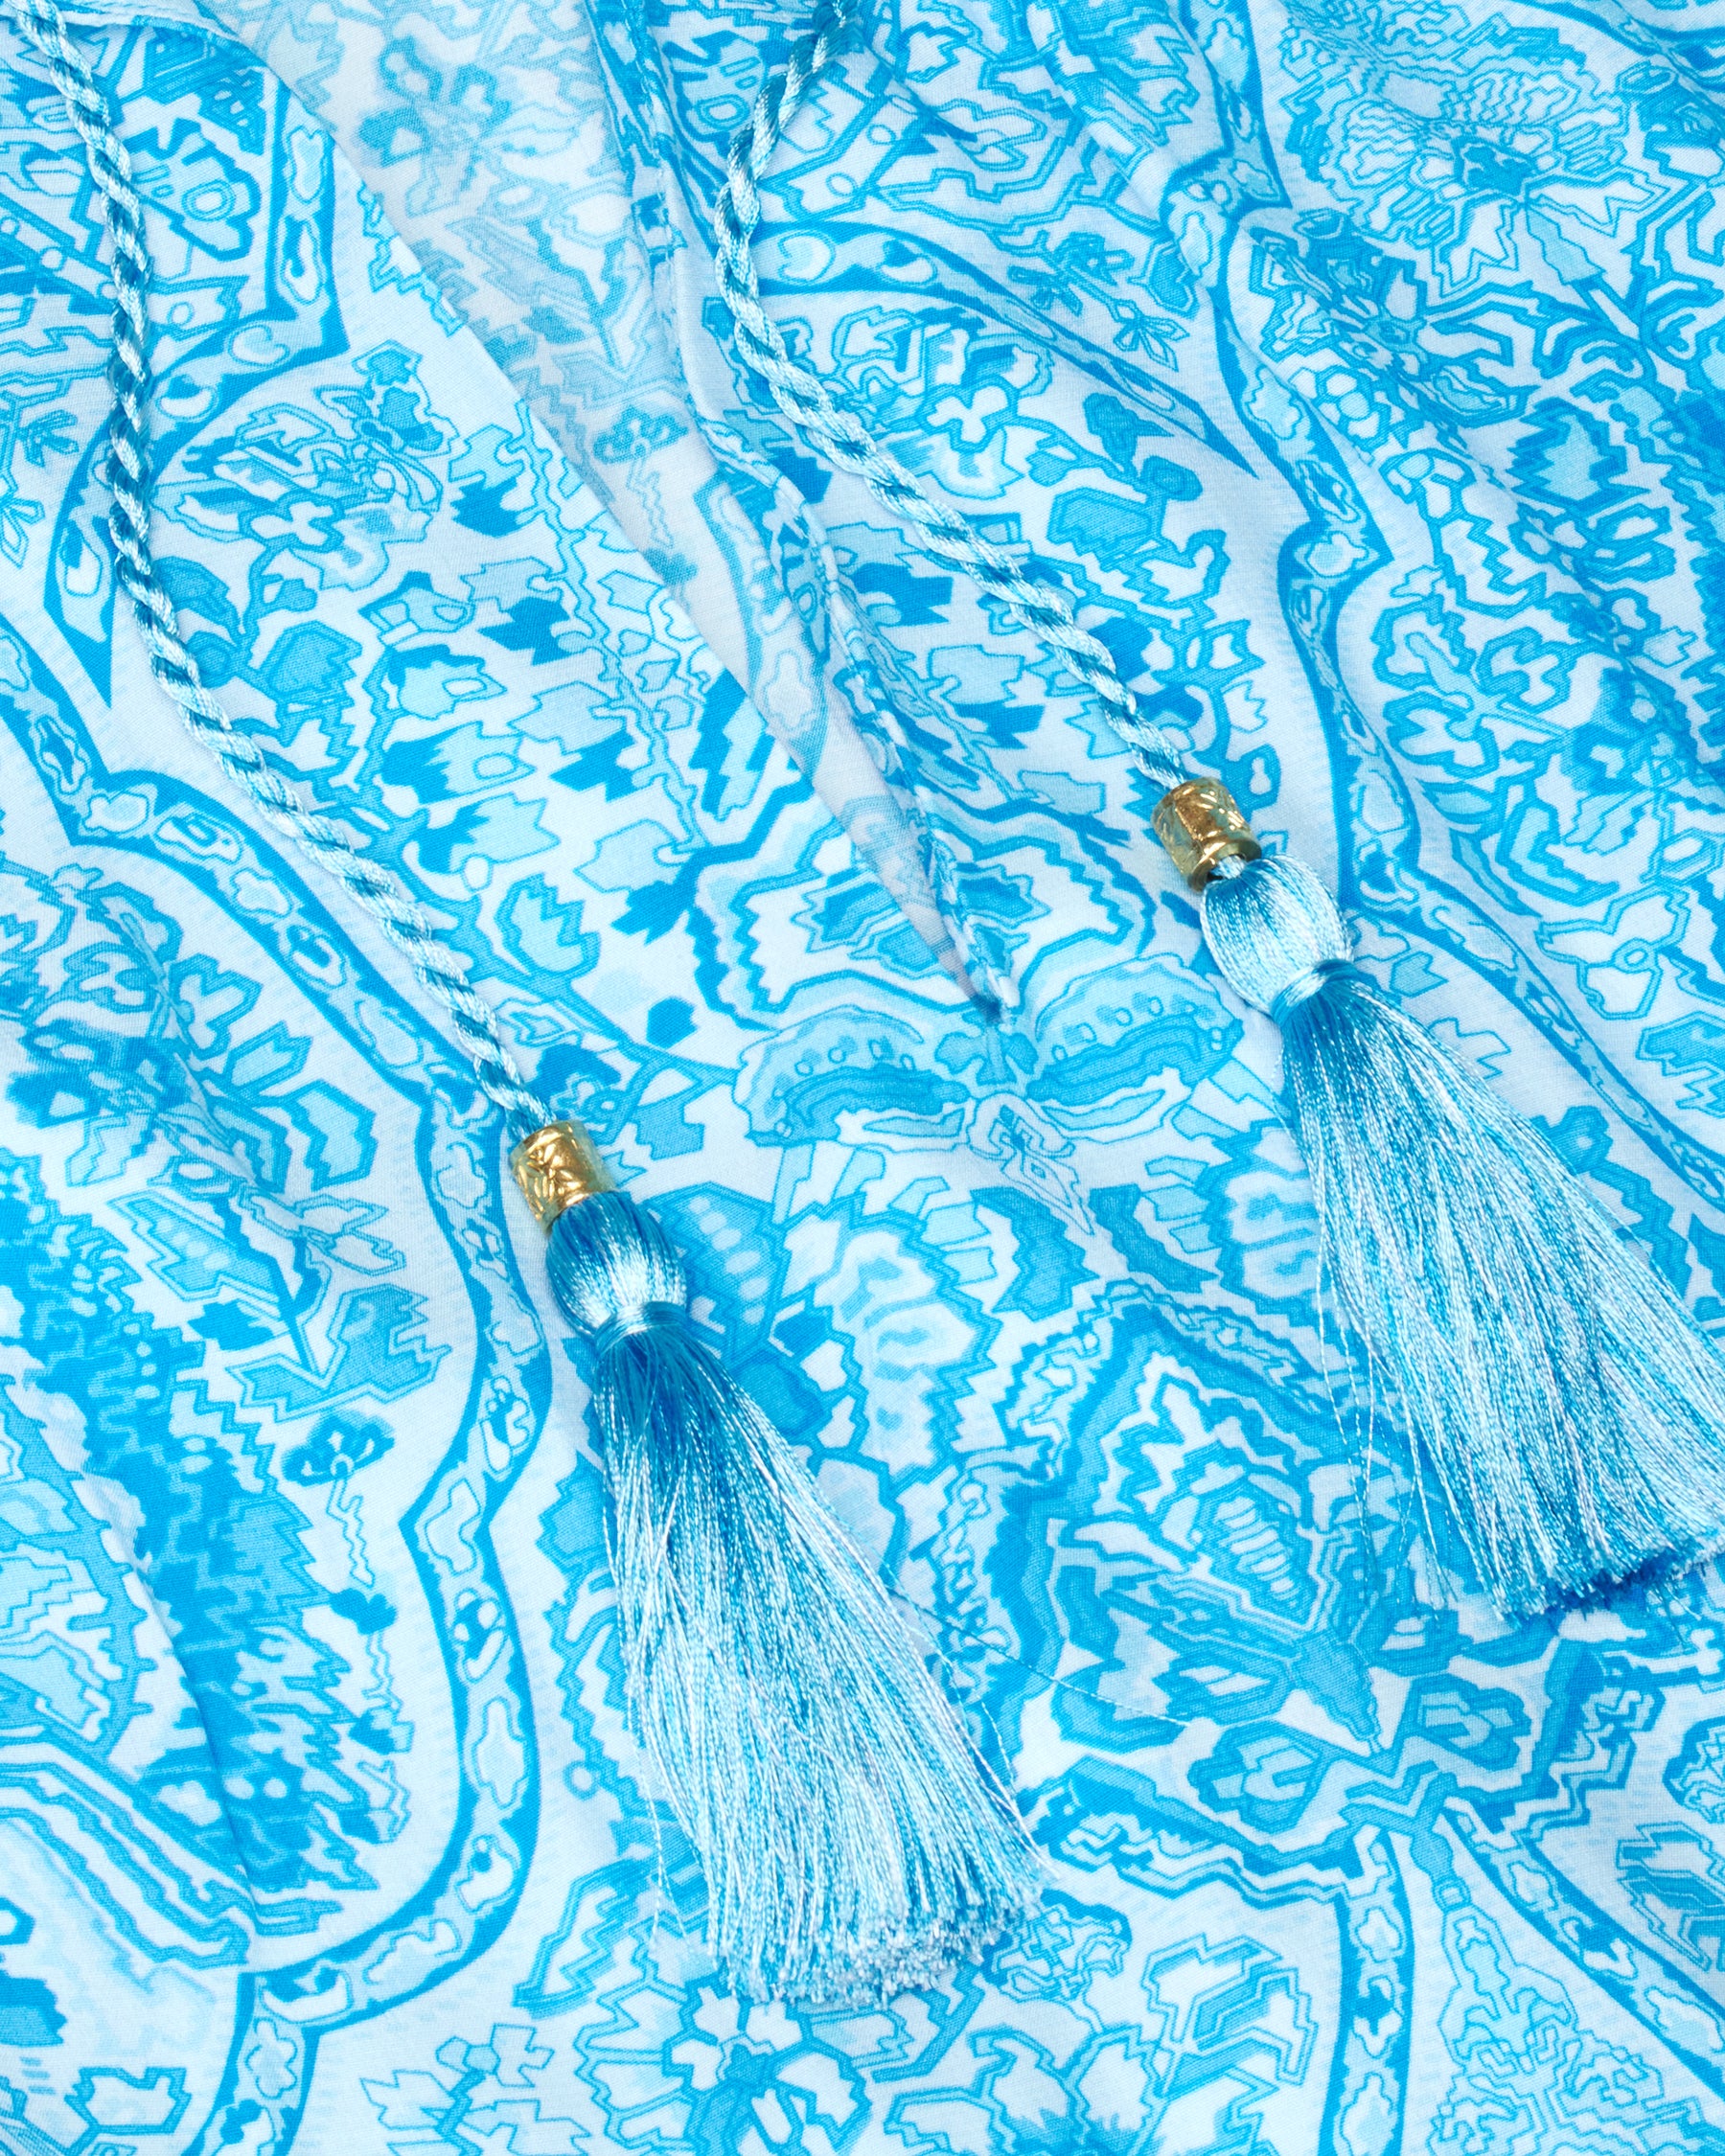 Chloe Crinkle Chiffon Flutter Sleeve Top in Turquoise Paisley-Detail of Tassels